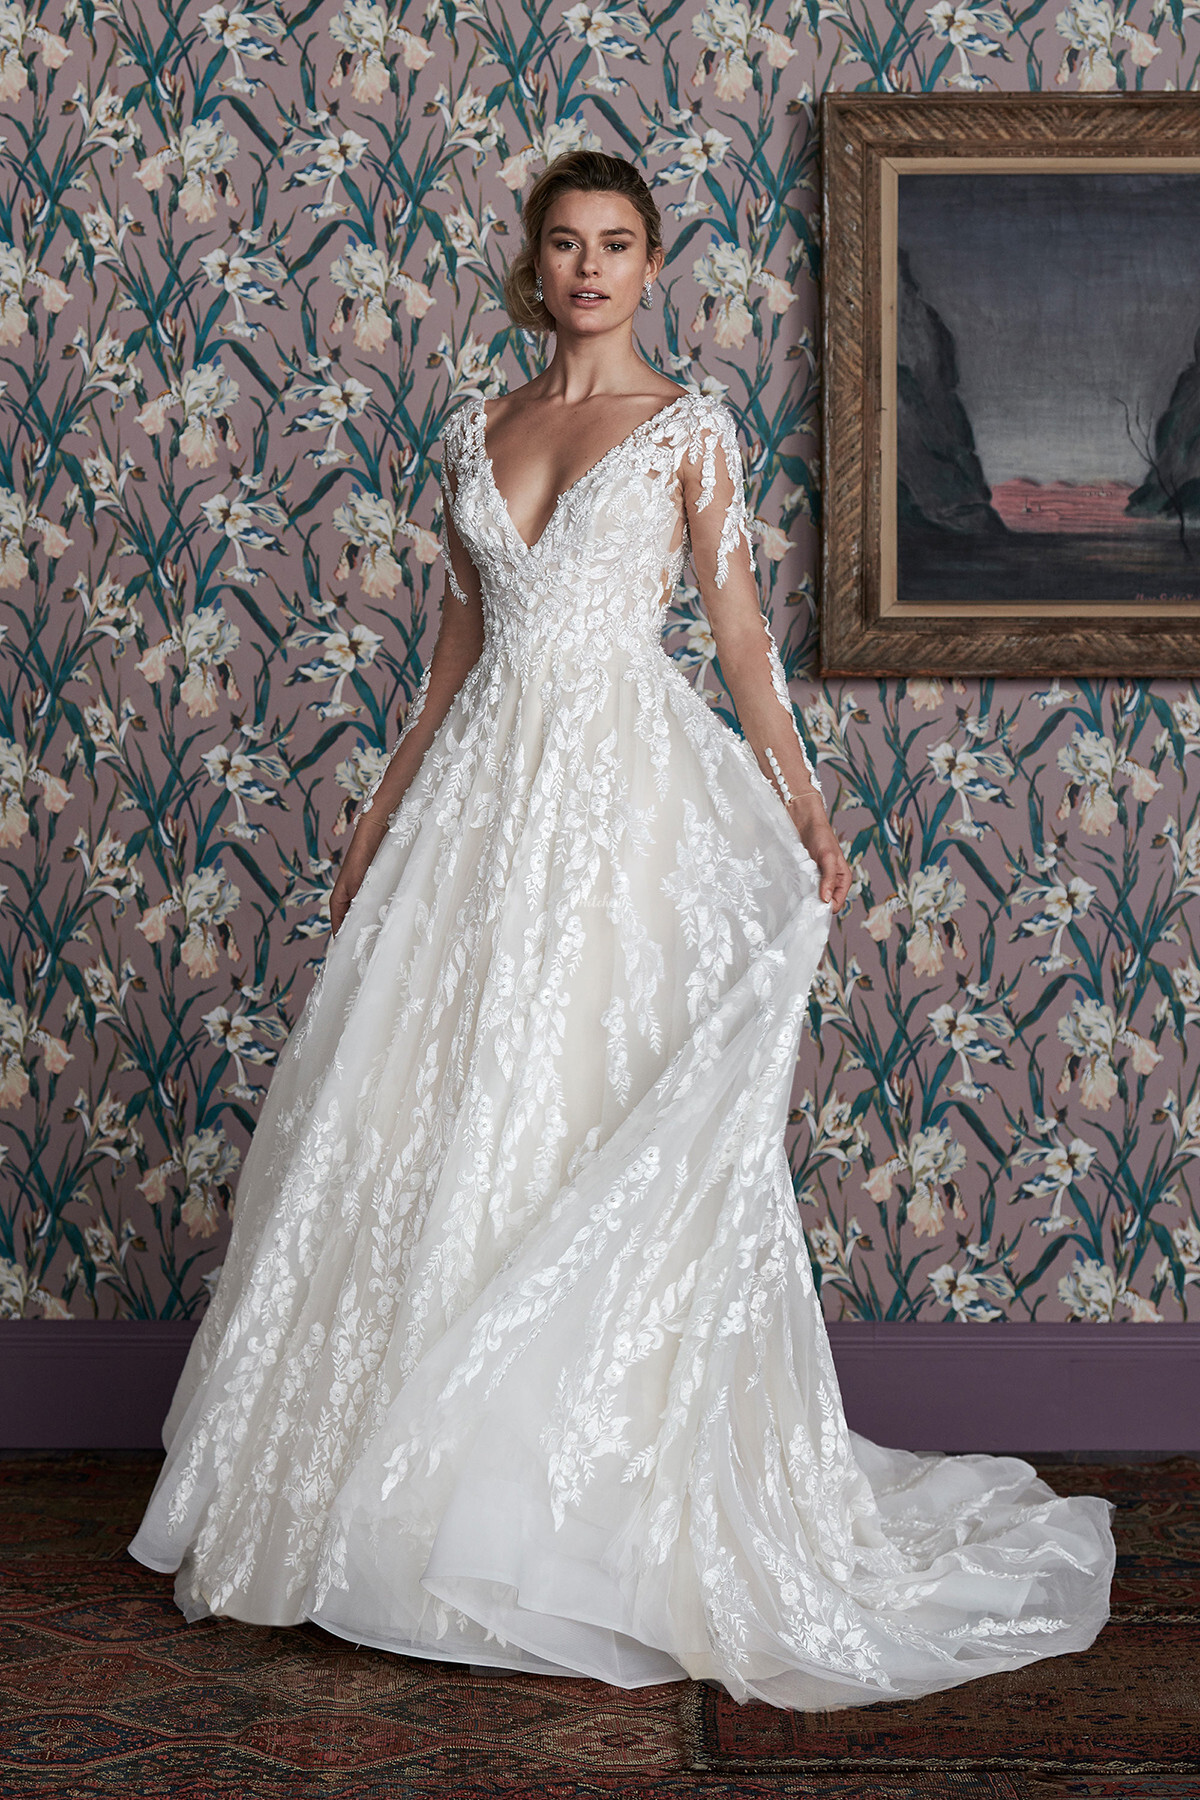 julie Wedding Dress from Justin Alexander Signature - hitched.co.uk